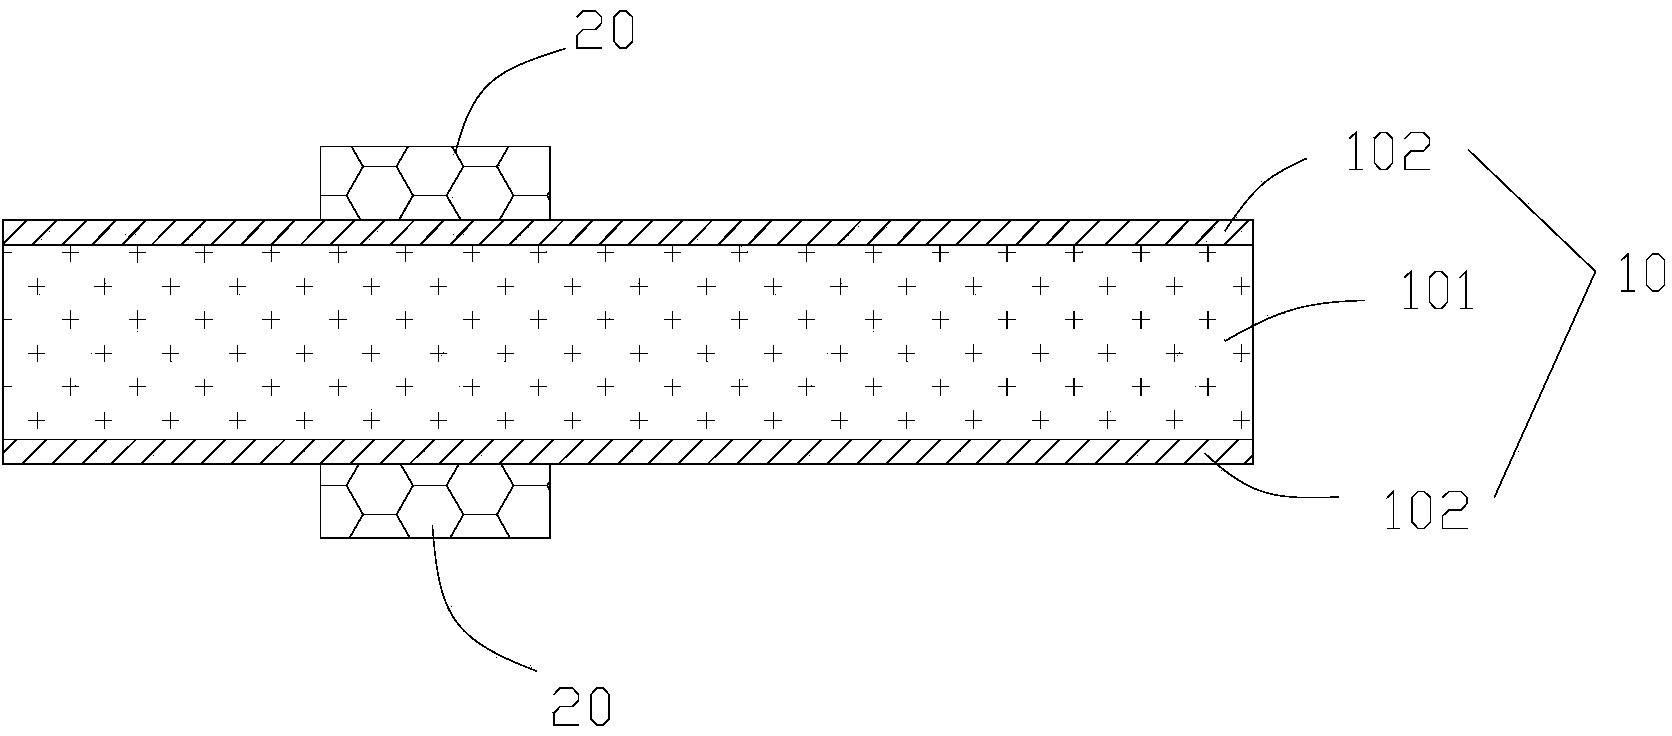 Method for forming breakage holes in printed circuit board